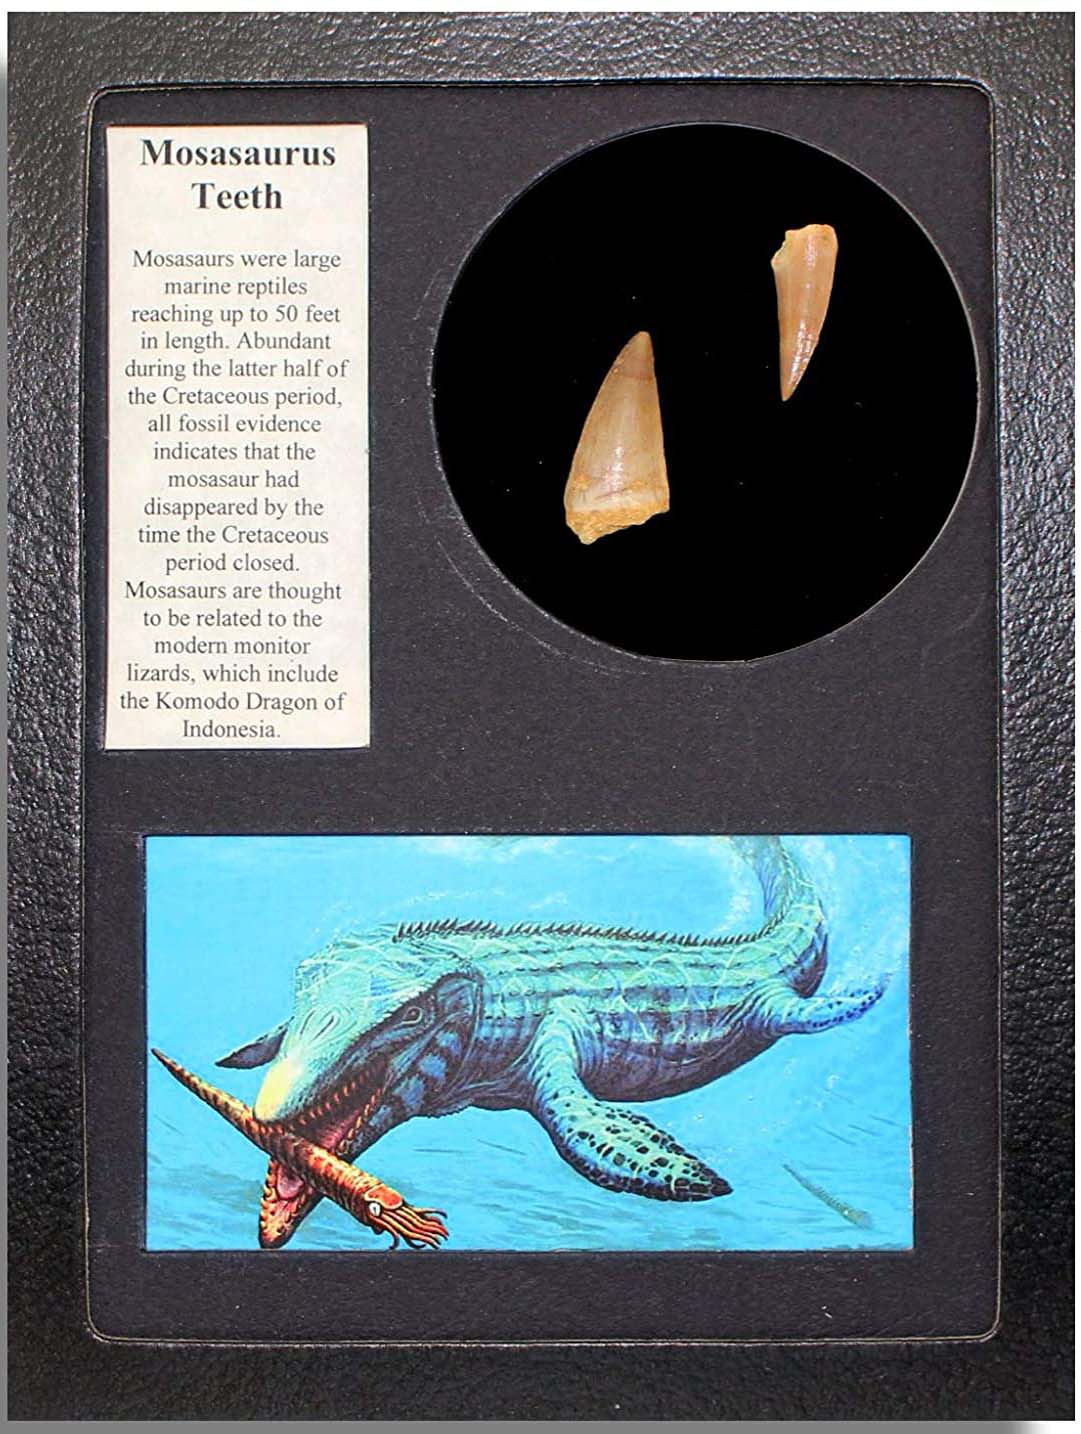 Mosasaurus Teeth Fossil in Collector's Box